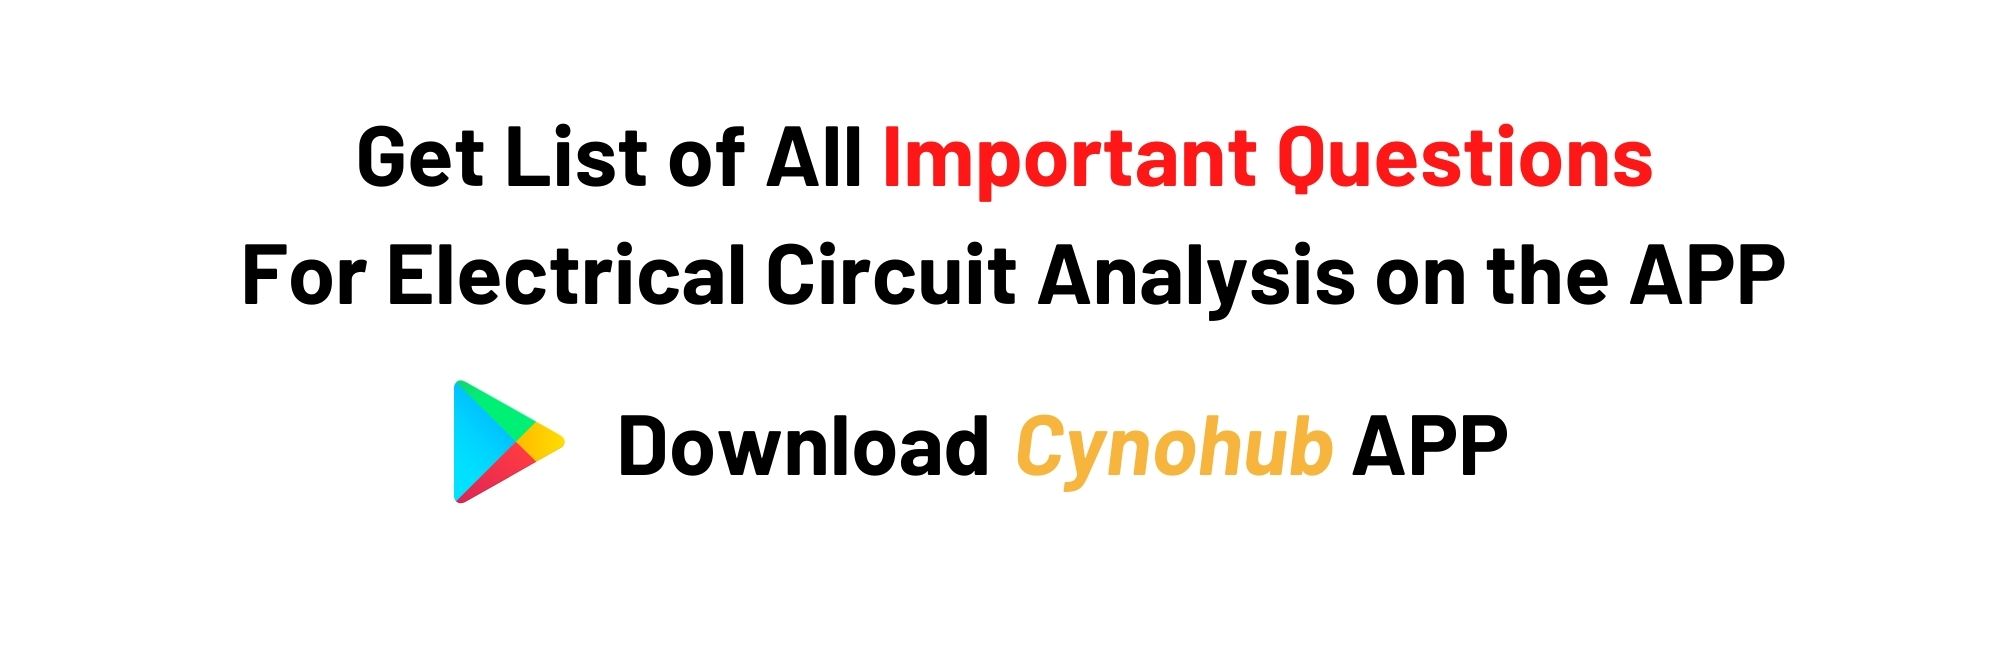 Electrical Circuit Analysis